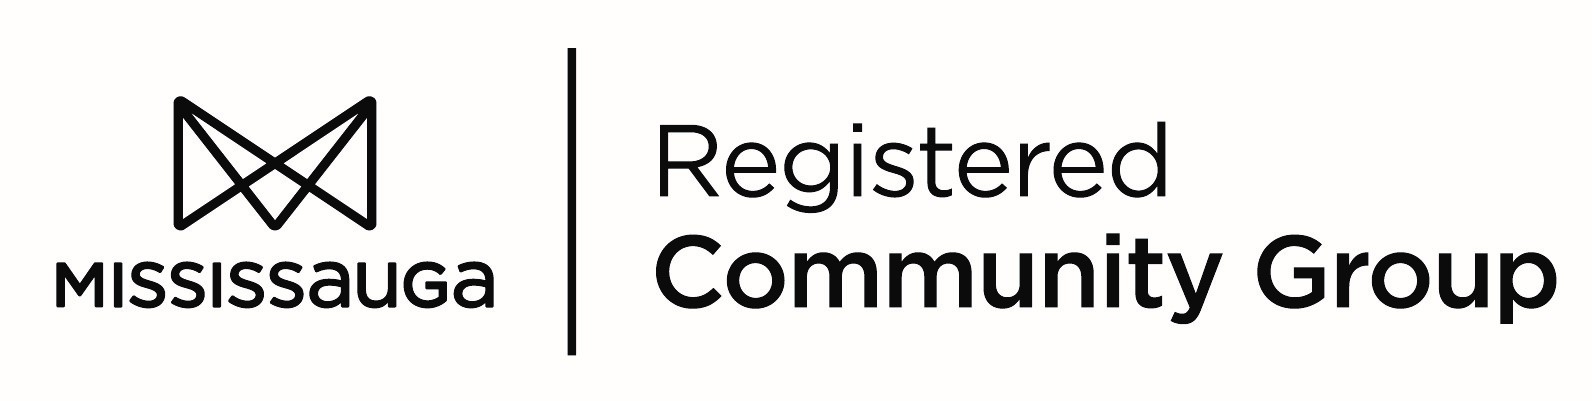 Community Group Registry Program logo